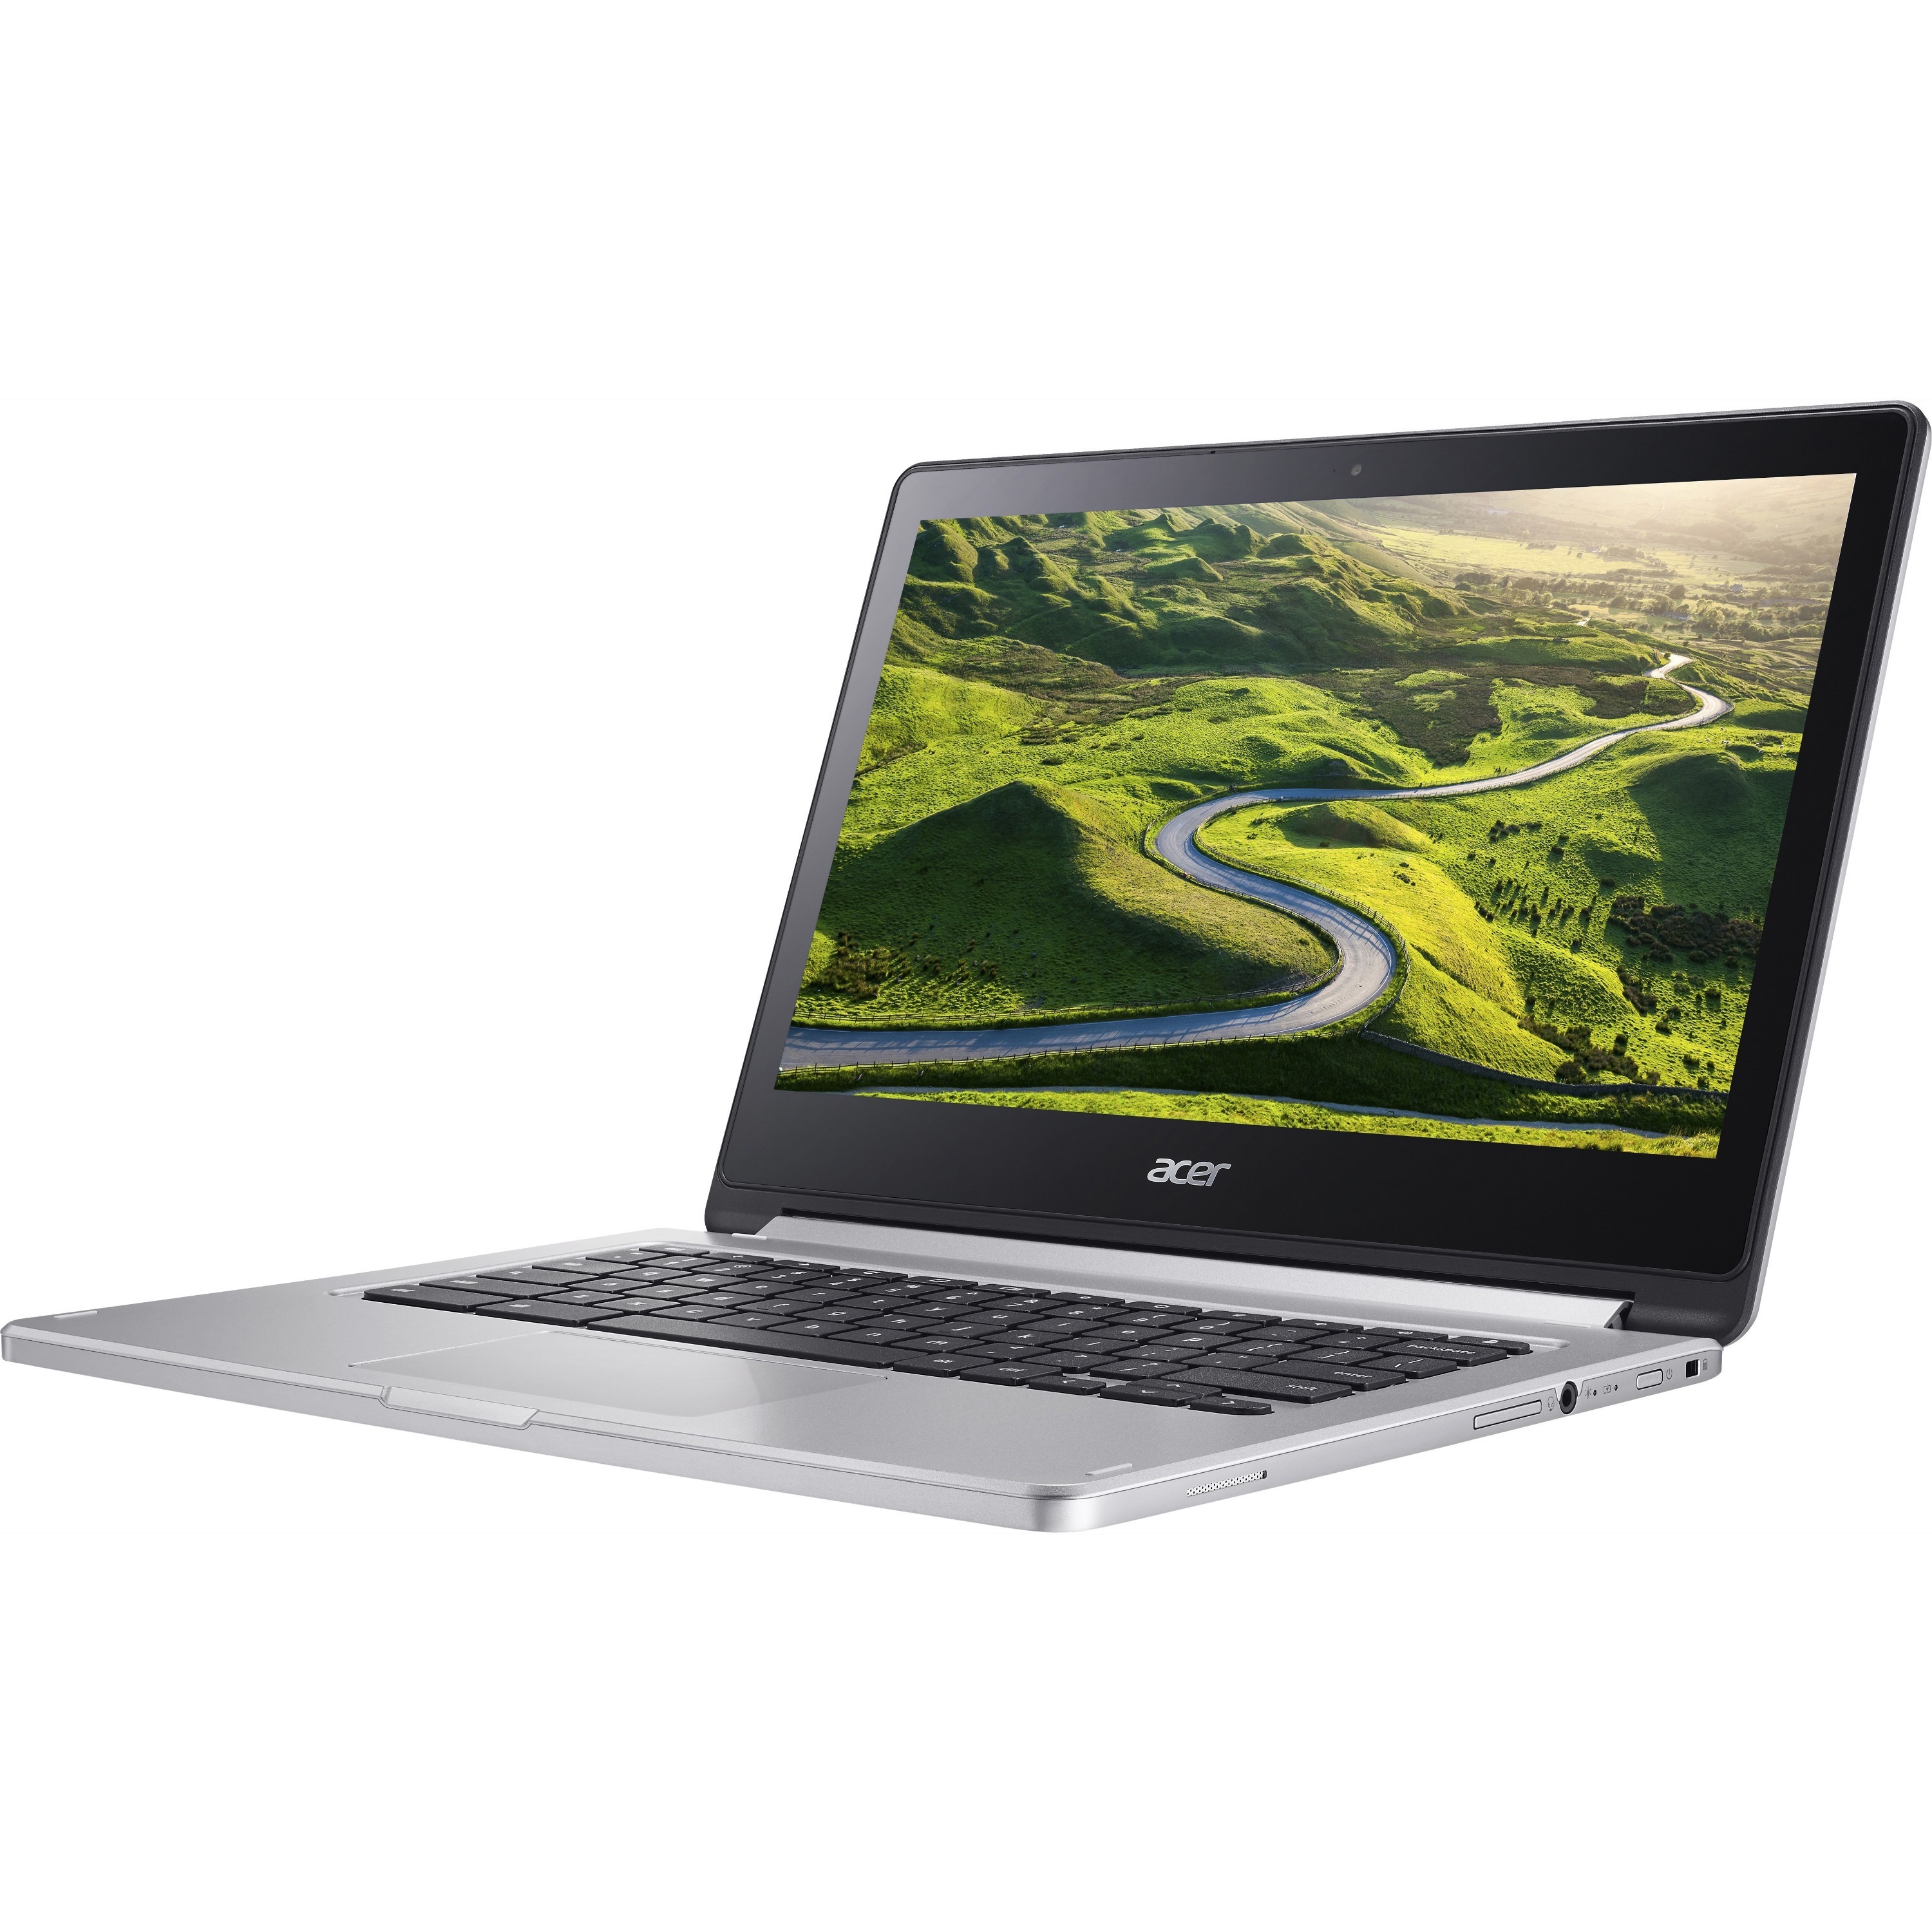 Acer R13 Mediatek 2-in-1 Touch 4GB/64GB Chromebook, 13.3" FHD Touch Display, MediaTek MT8173C Quad-Core Processor, 4GB LPDDR3, 64GB eMMC, Chrome OS - CB5-312T-K95W - image 3 of 9